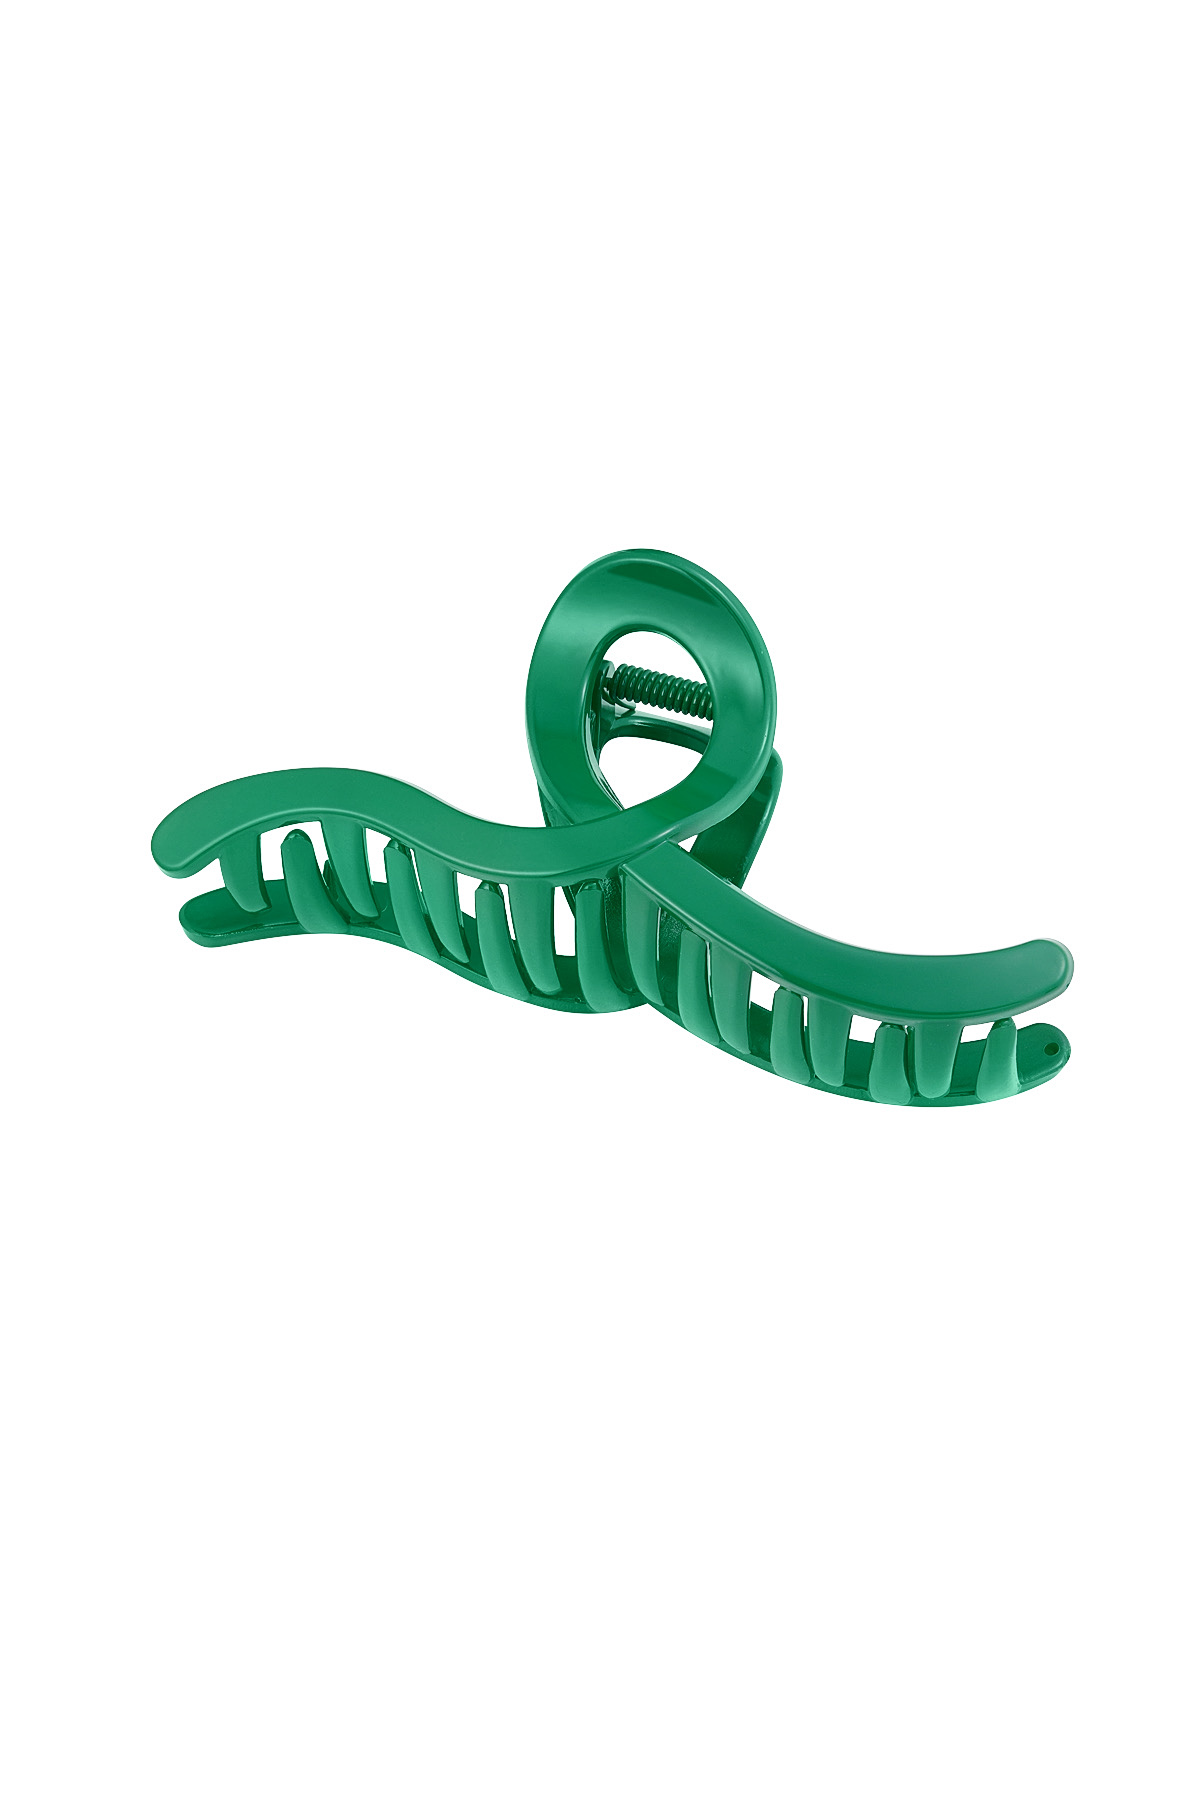 Hair clip swing - green 